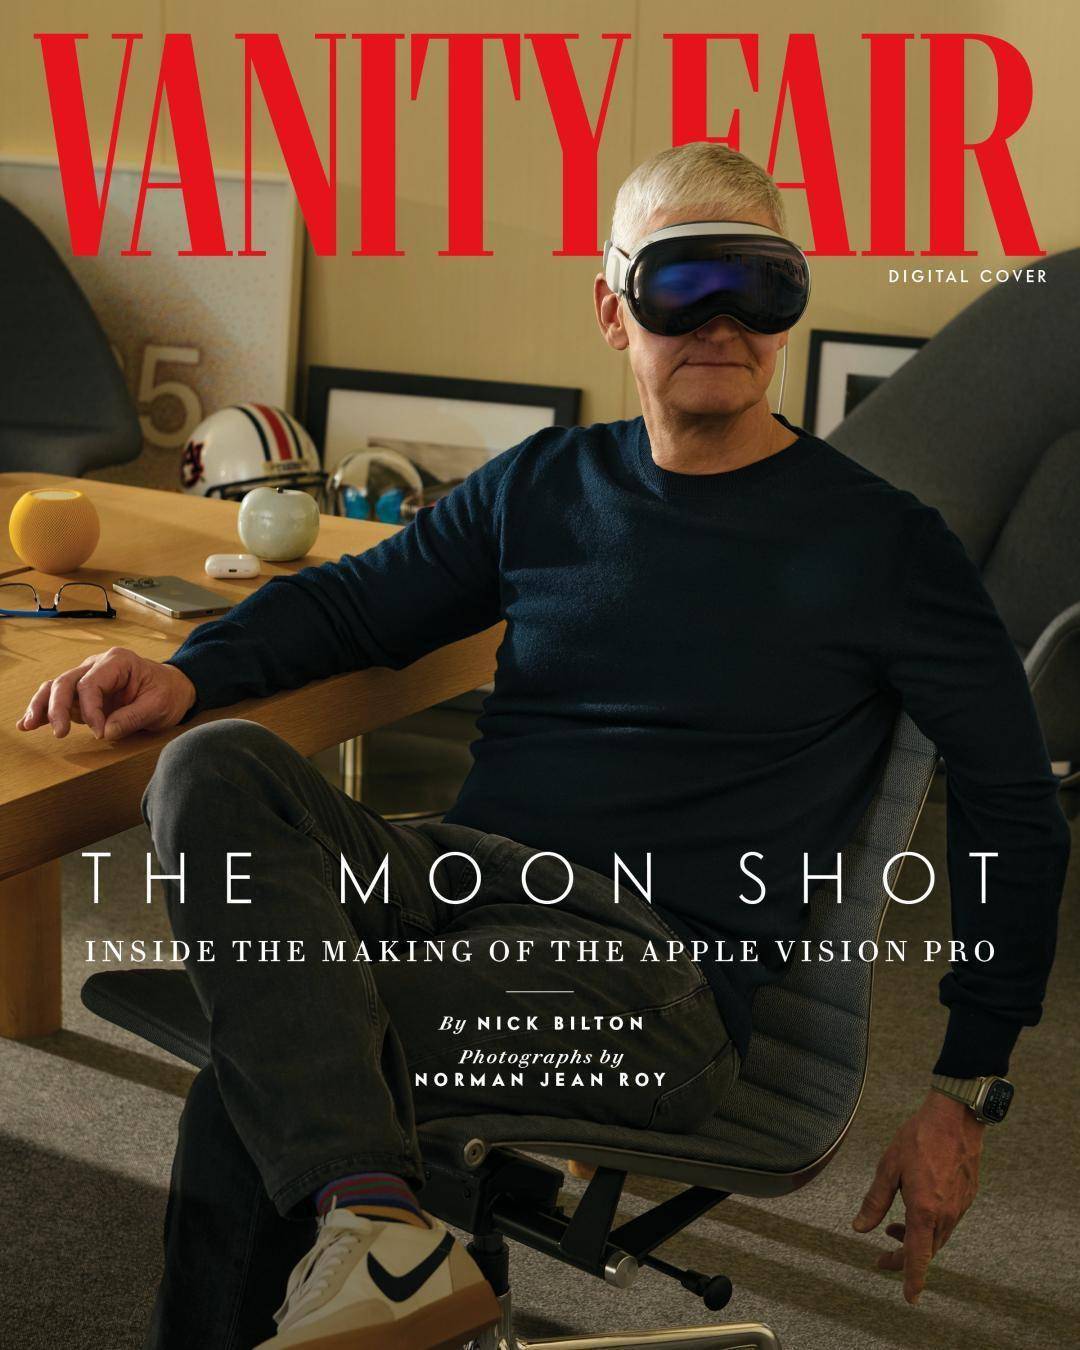 Vanity Fair Magazine Cover